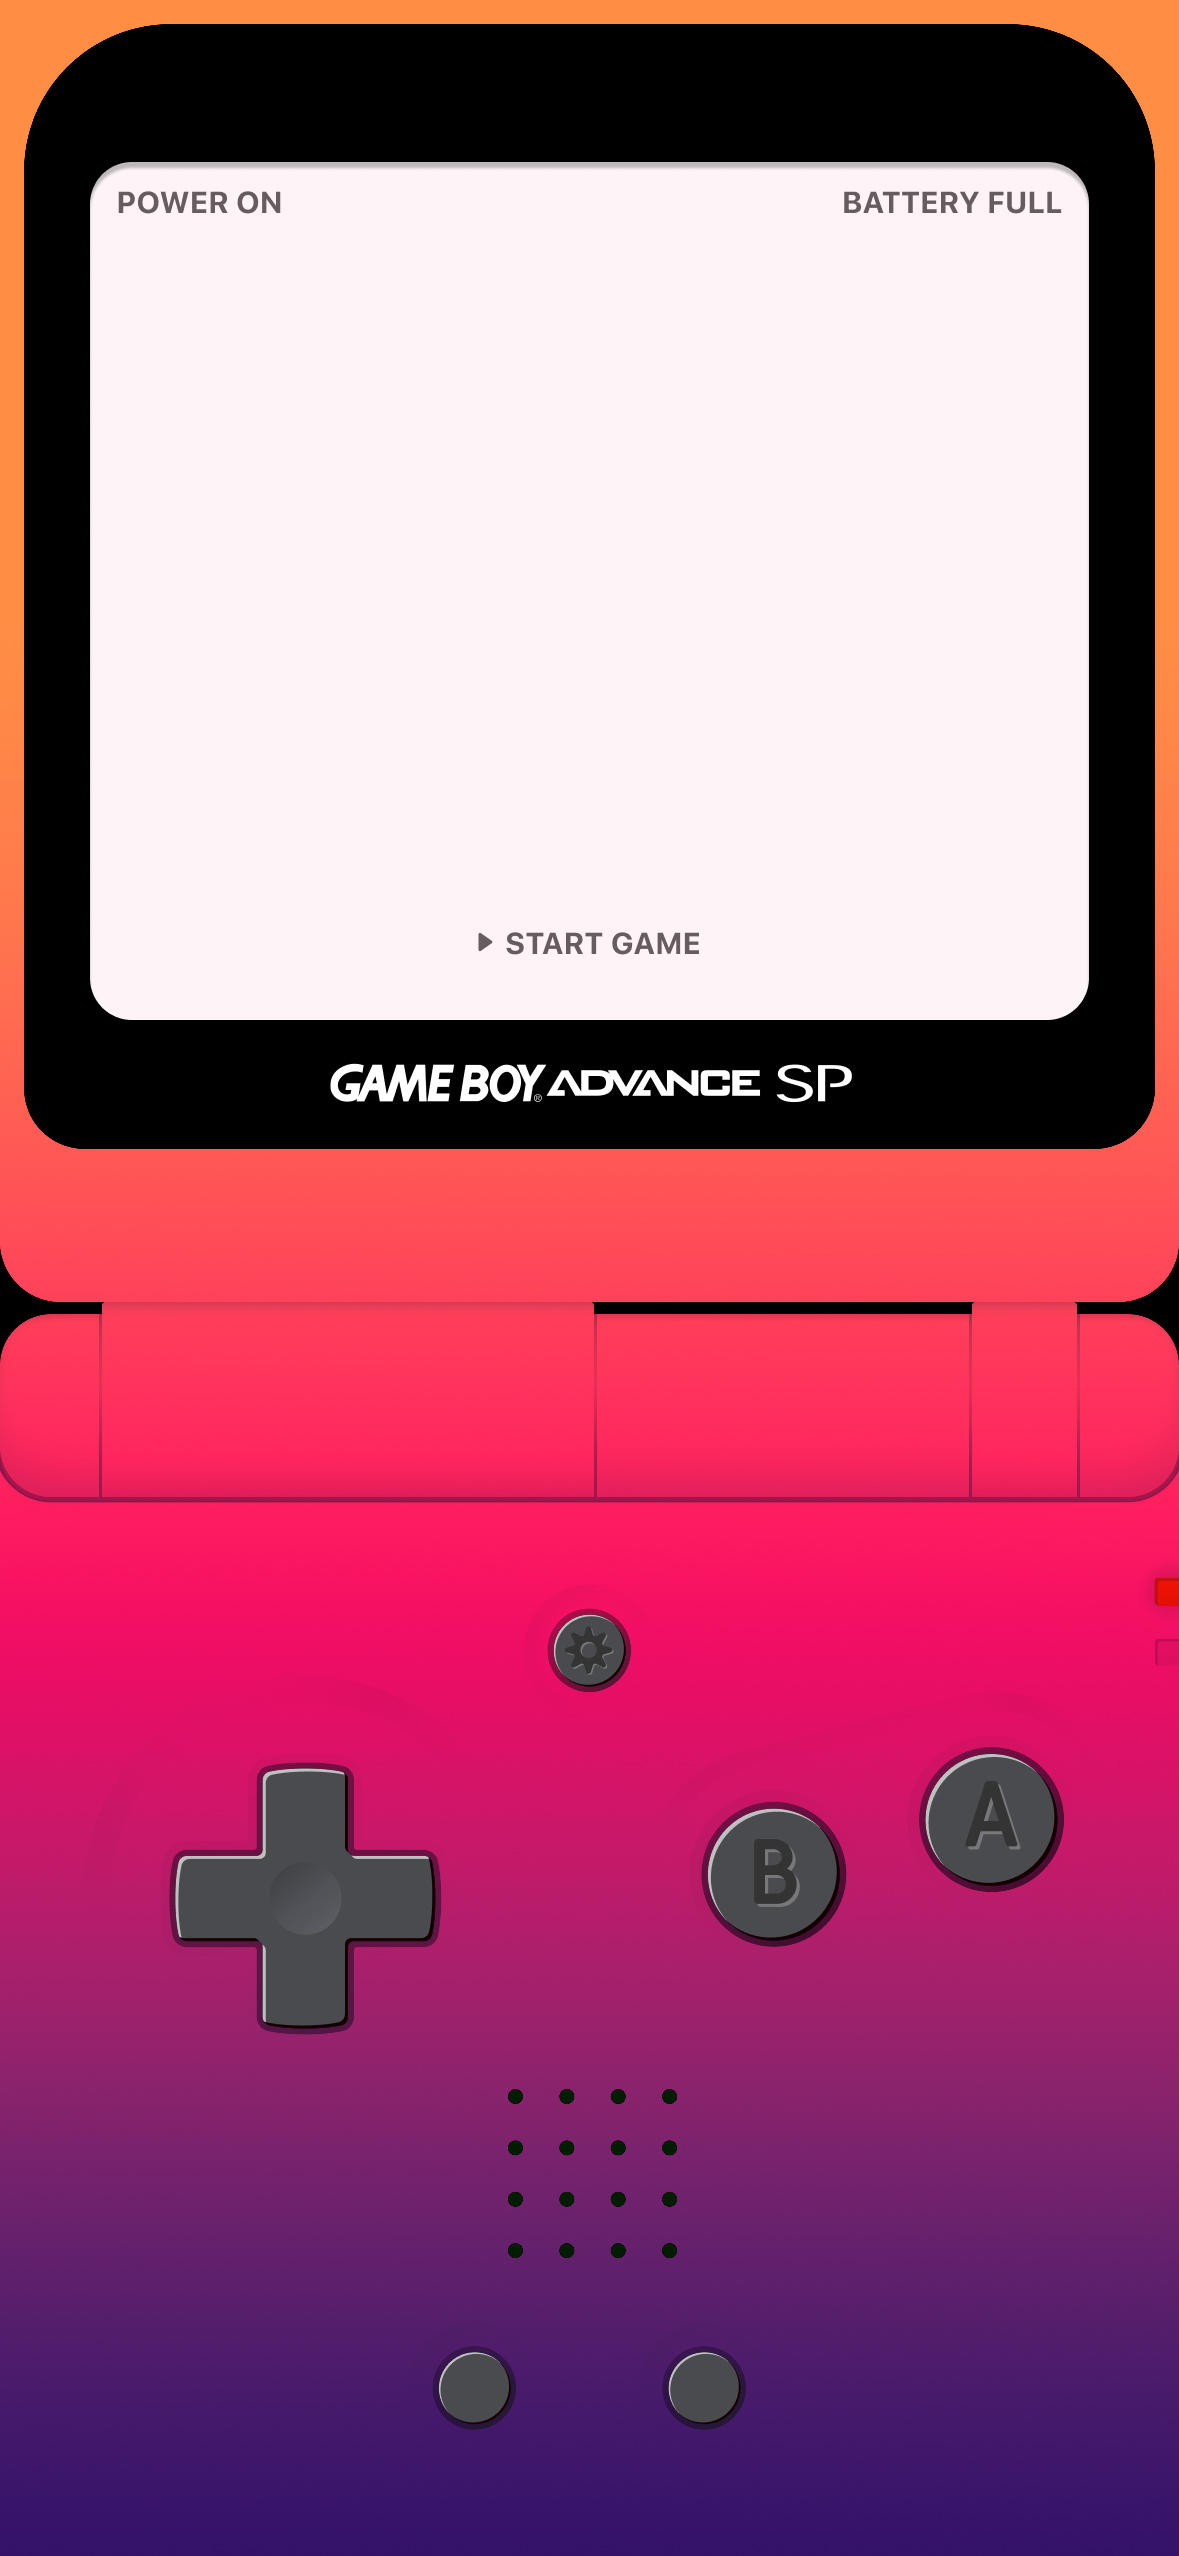 Wallpaper de Game Boy viraliza entre usuários de iPhone; veja onde baixar